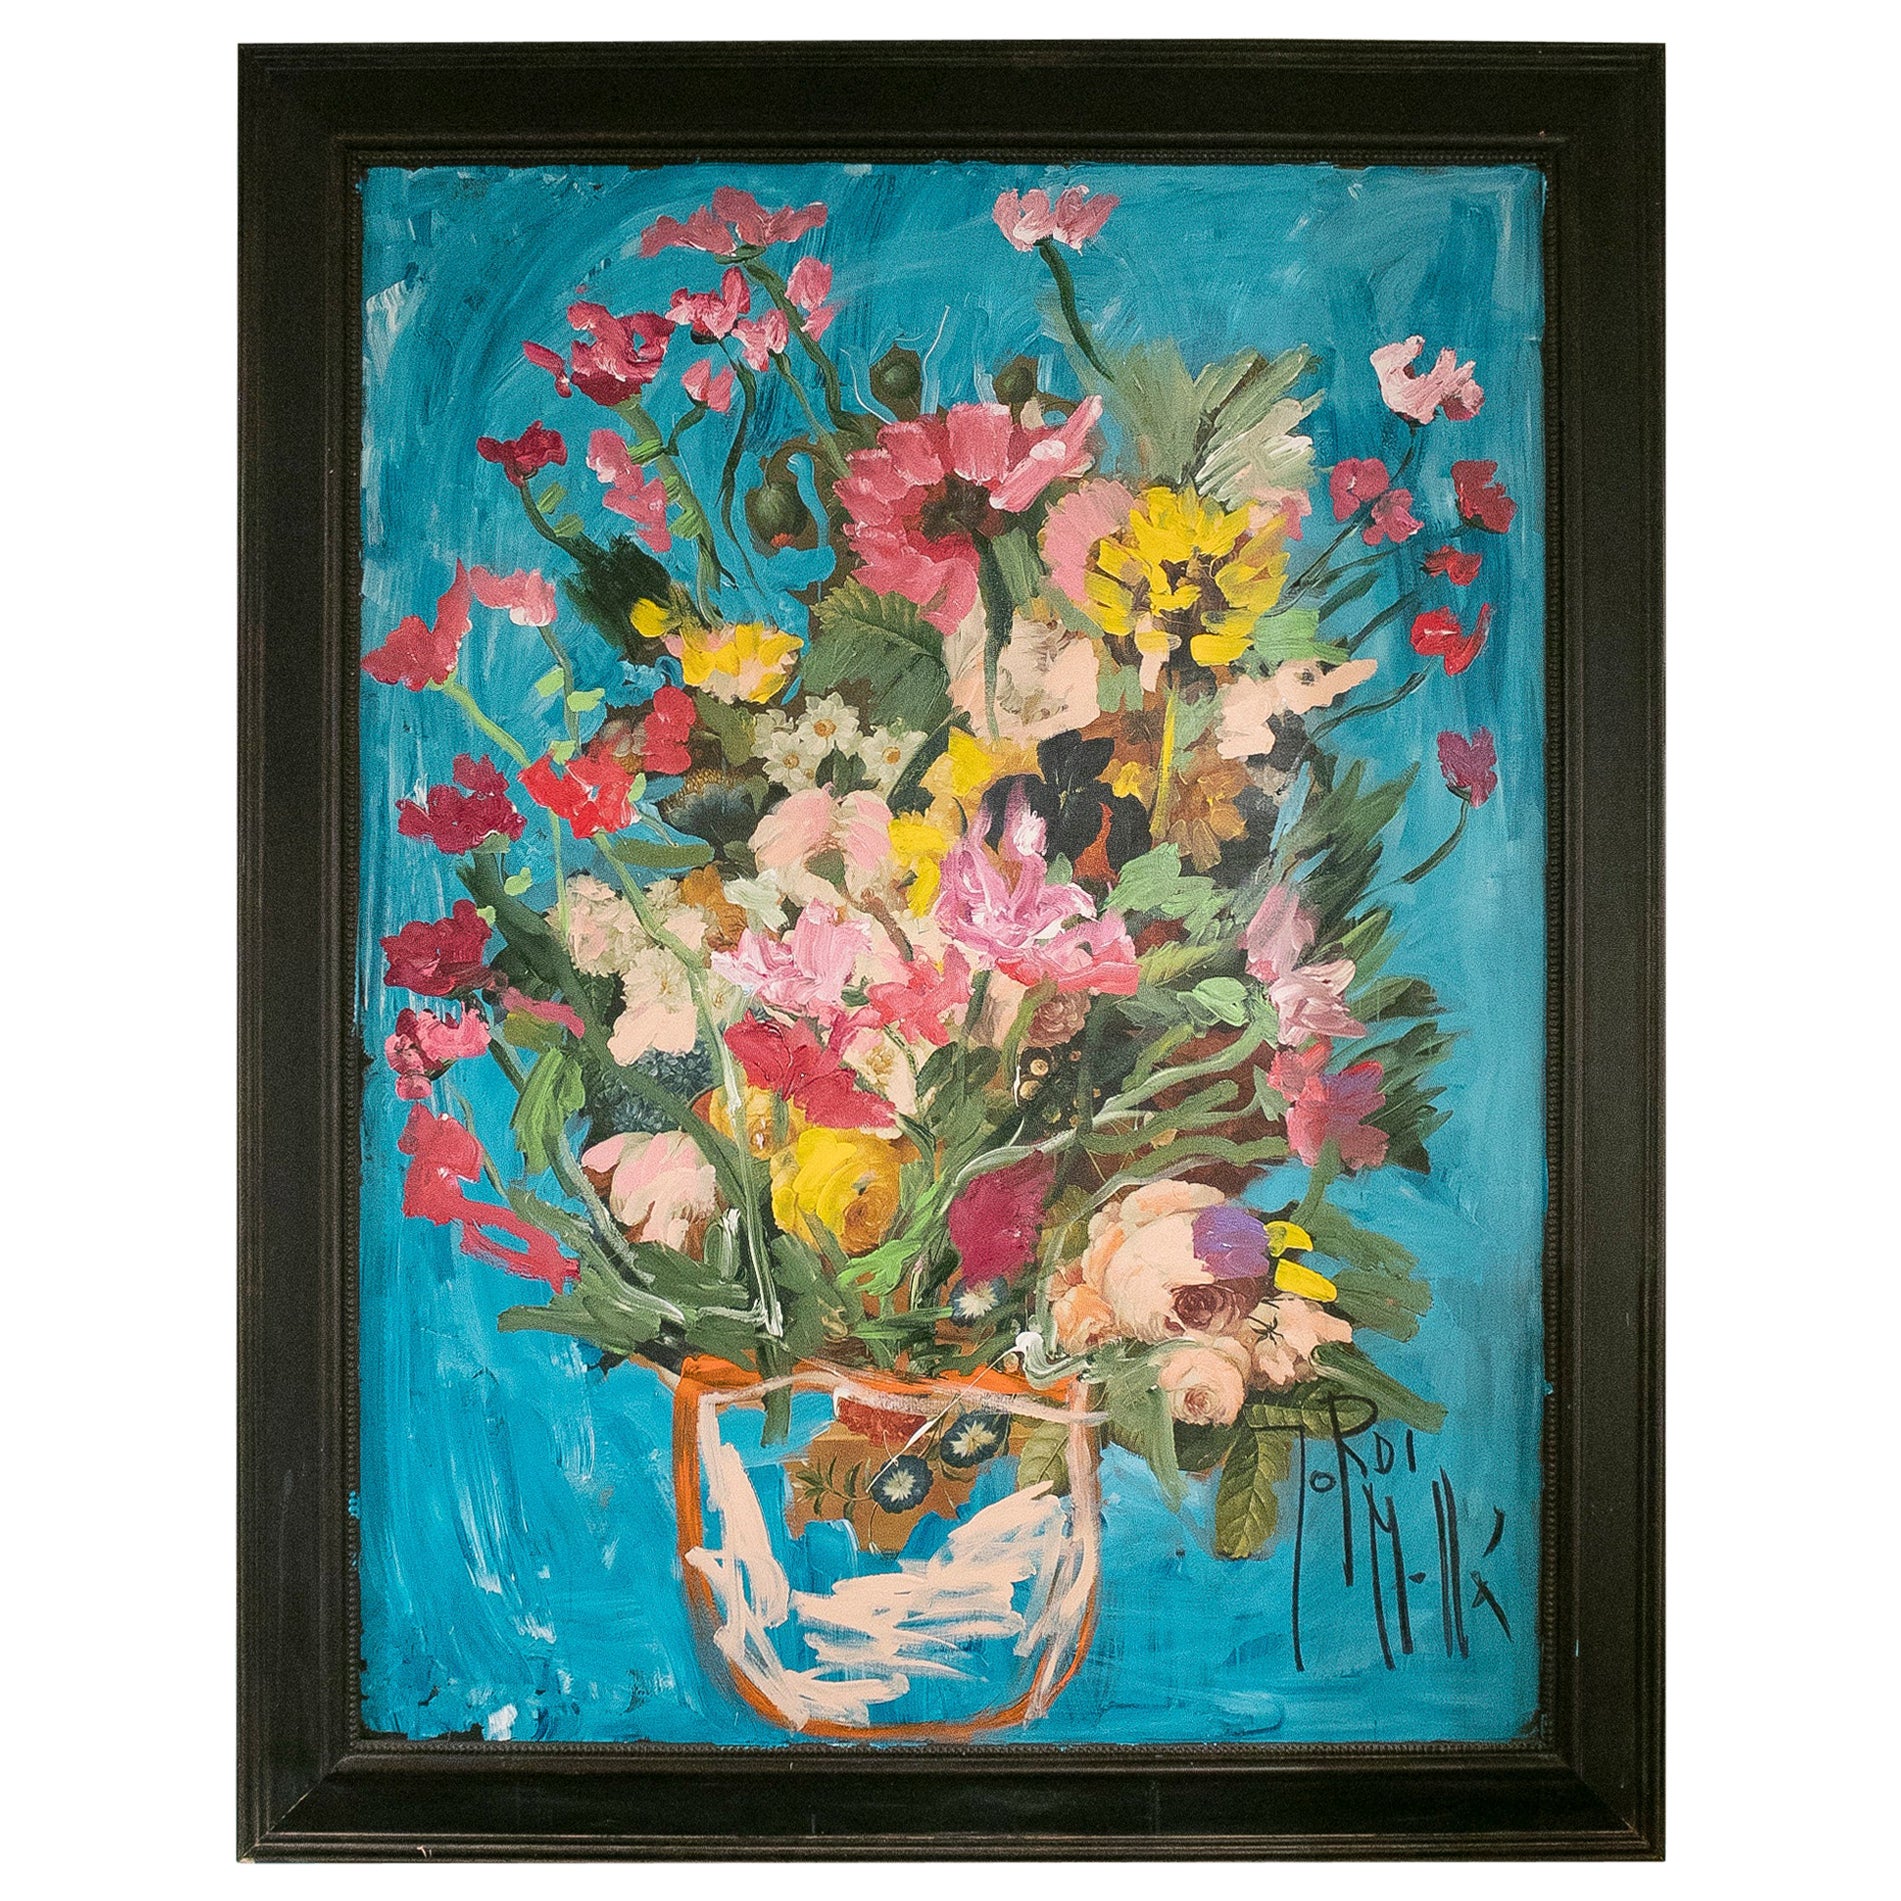 Jordi Mollá, 2021 "Flower Power" Marbella Series Oil Painting